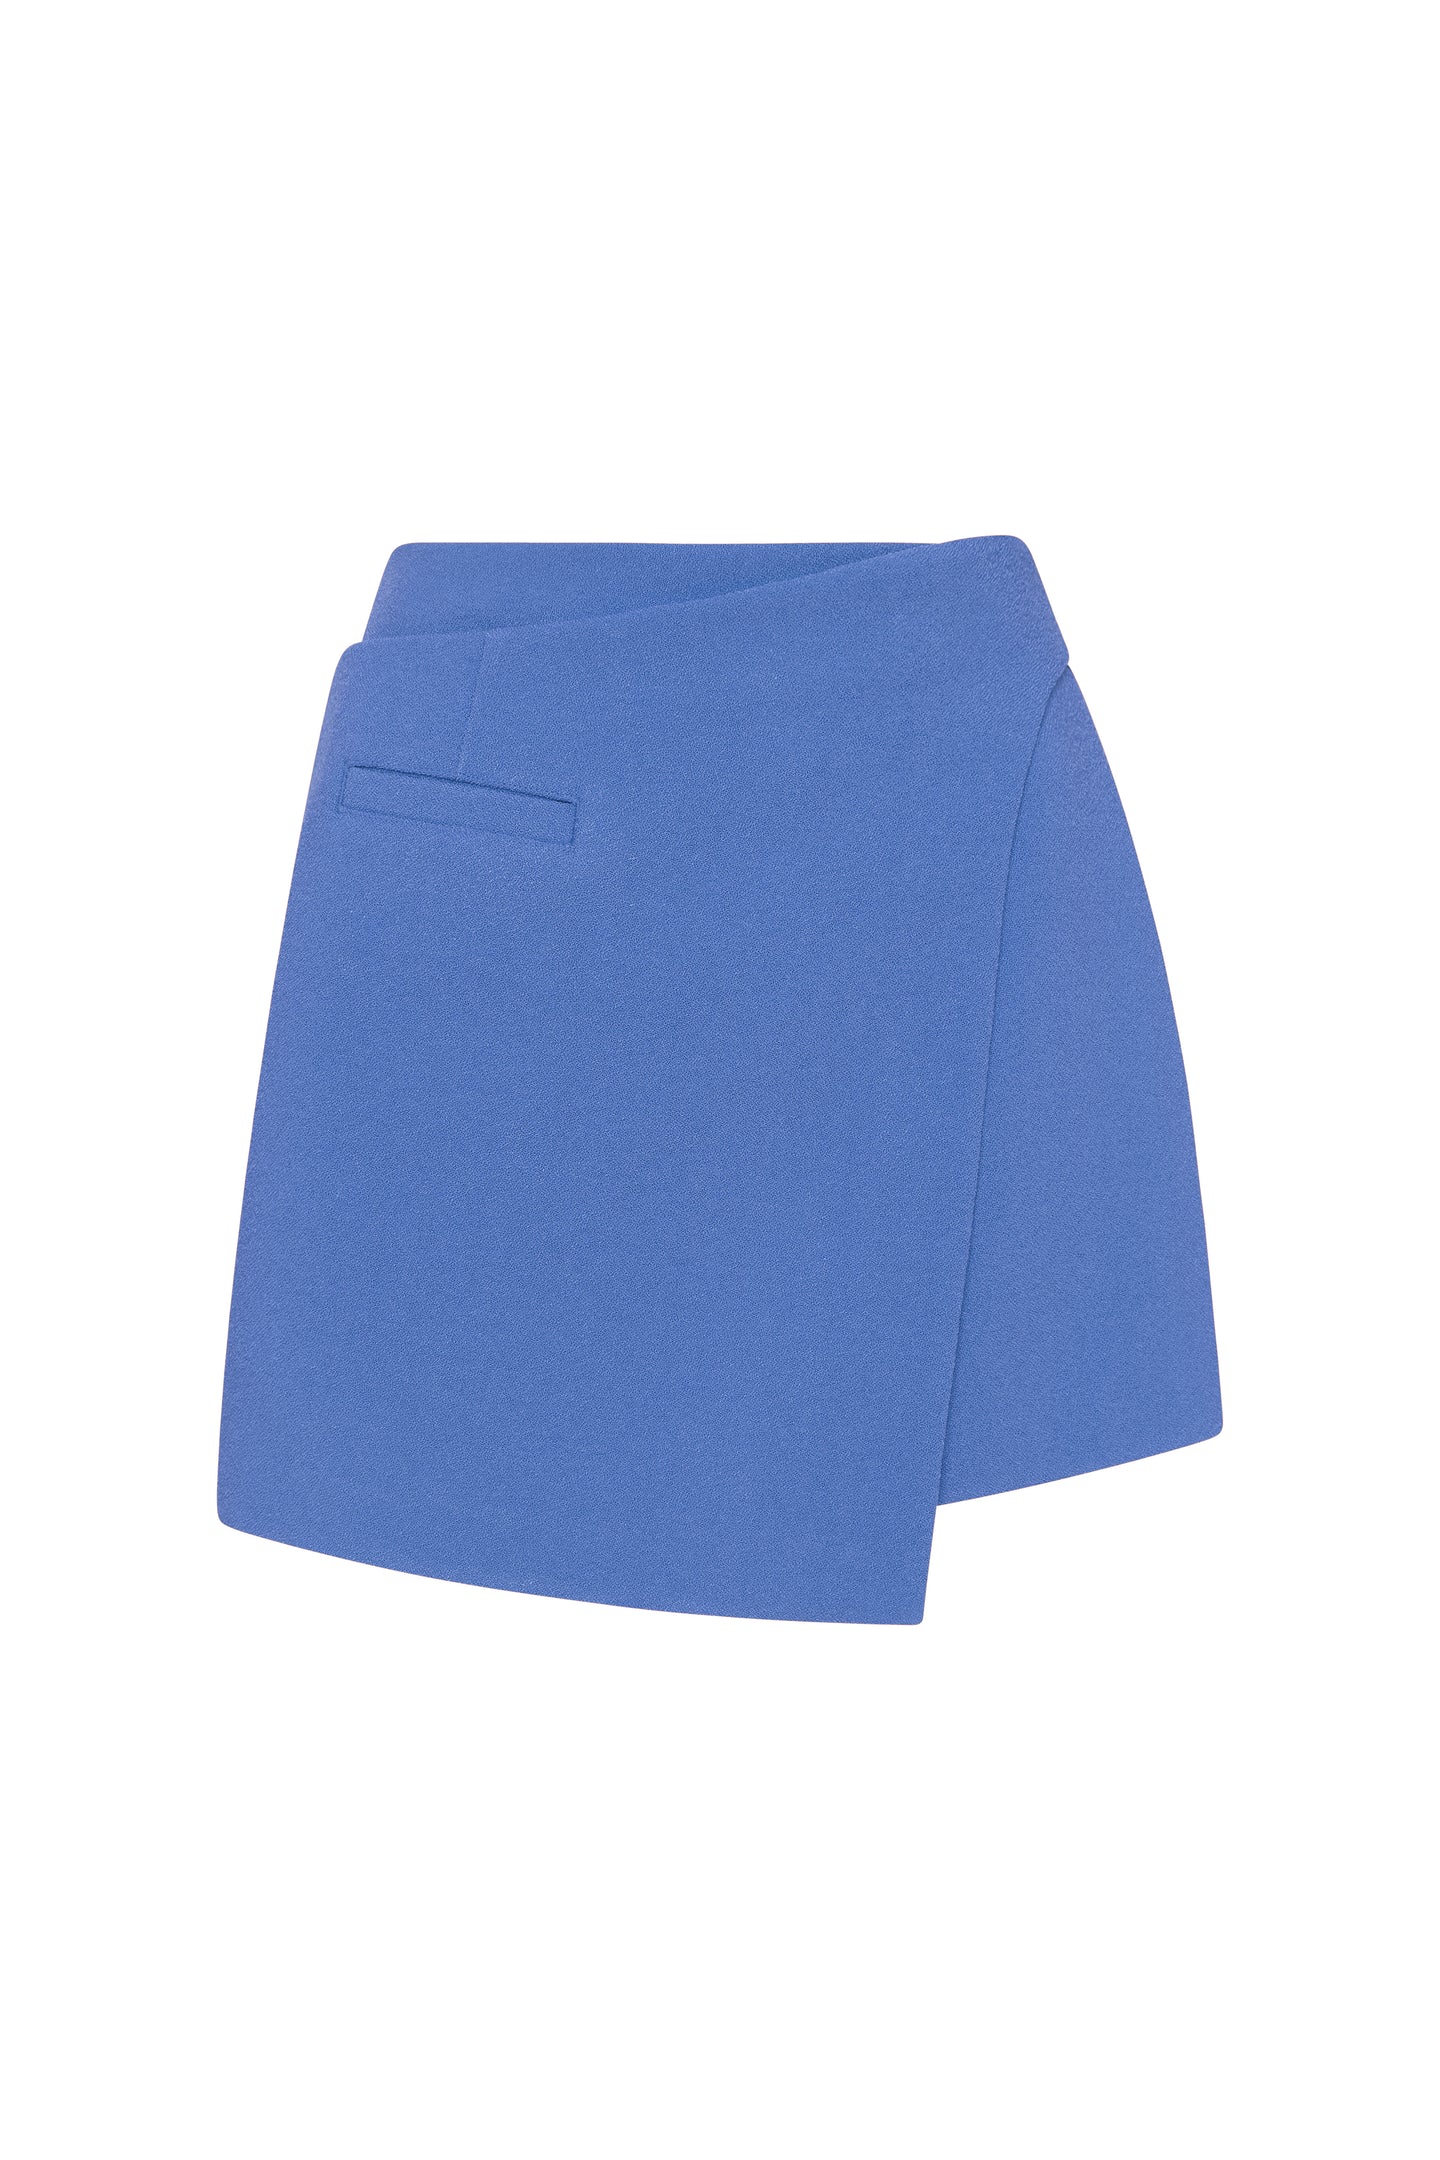 SIR the label Spoerri Mini Skirt Cobalt